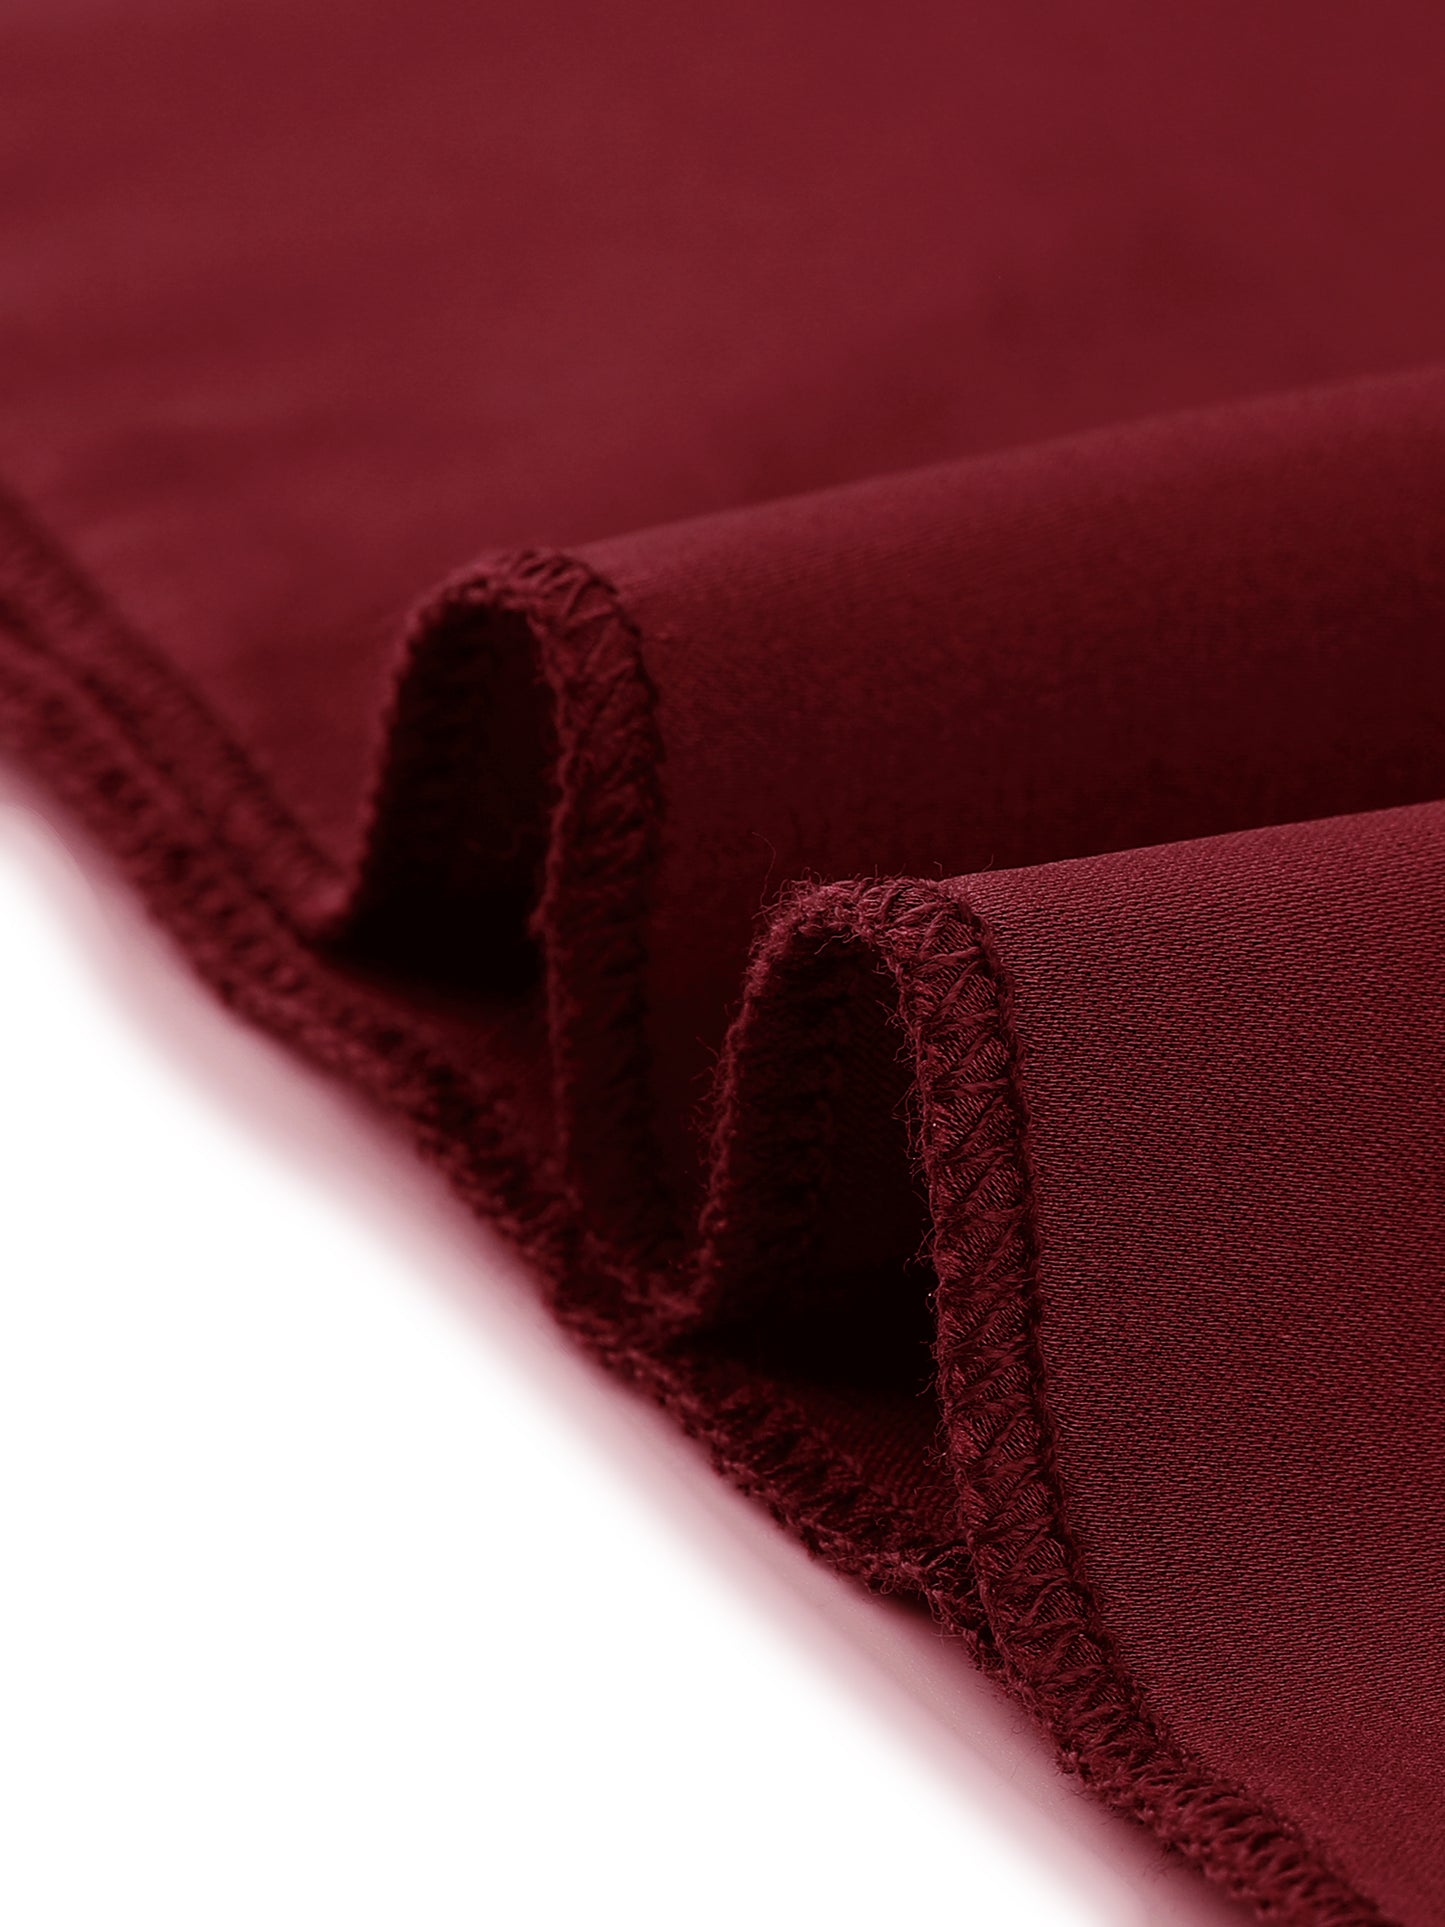 cheibear Satin Lingerie Lace Trim Cami Tops Shorts Sleepwear Pajamas Sets Wine Red